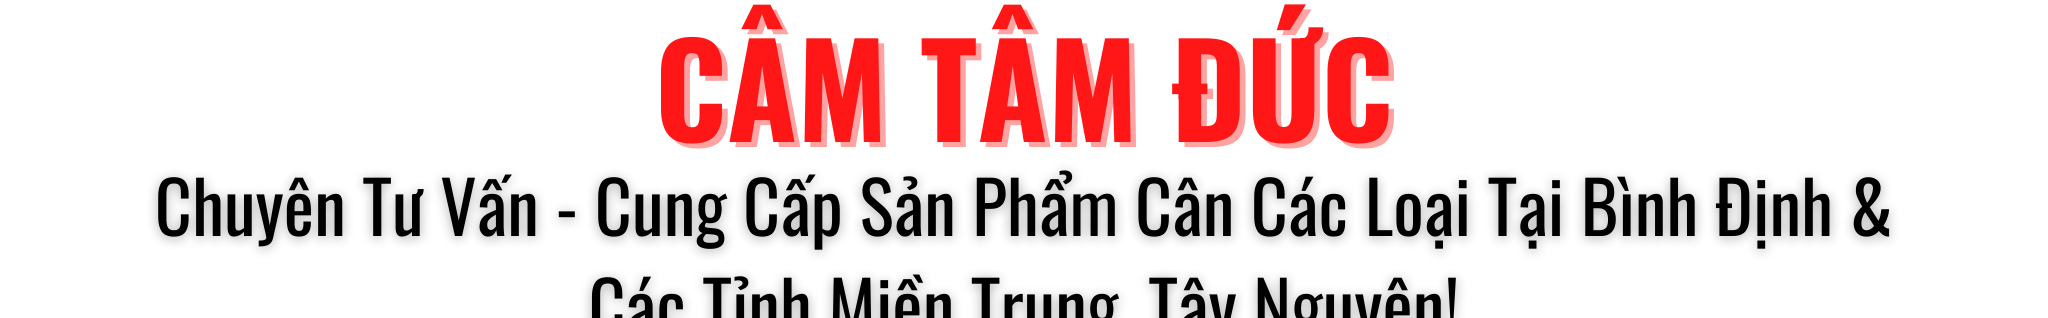 Cân Tâm Đức's profile banner